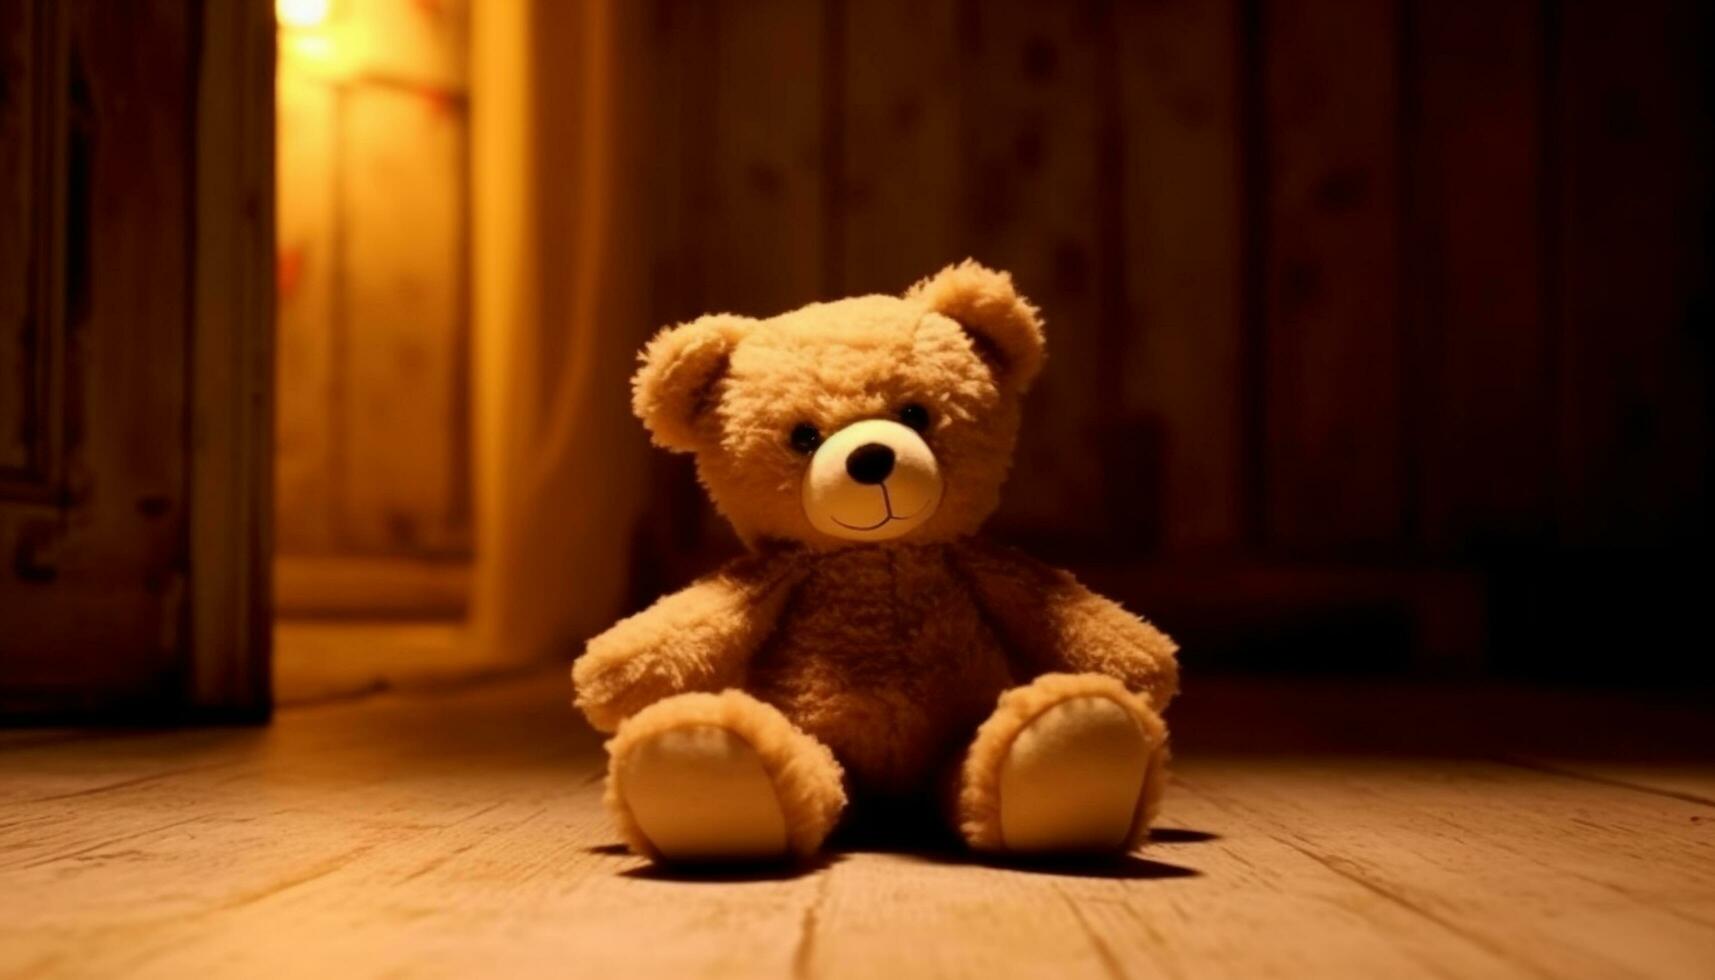 linda osito de peluche oso sentado en de madera piso, un infancia regalo generado por ai foto